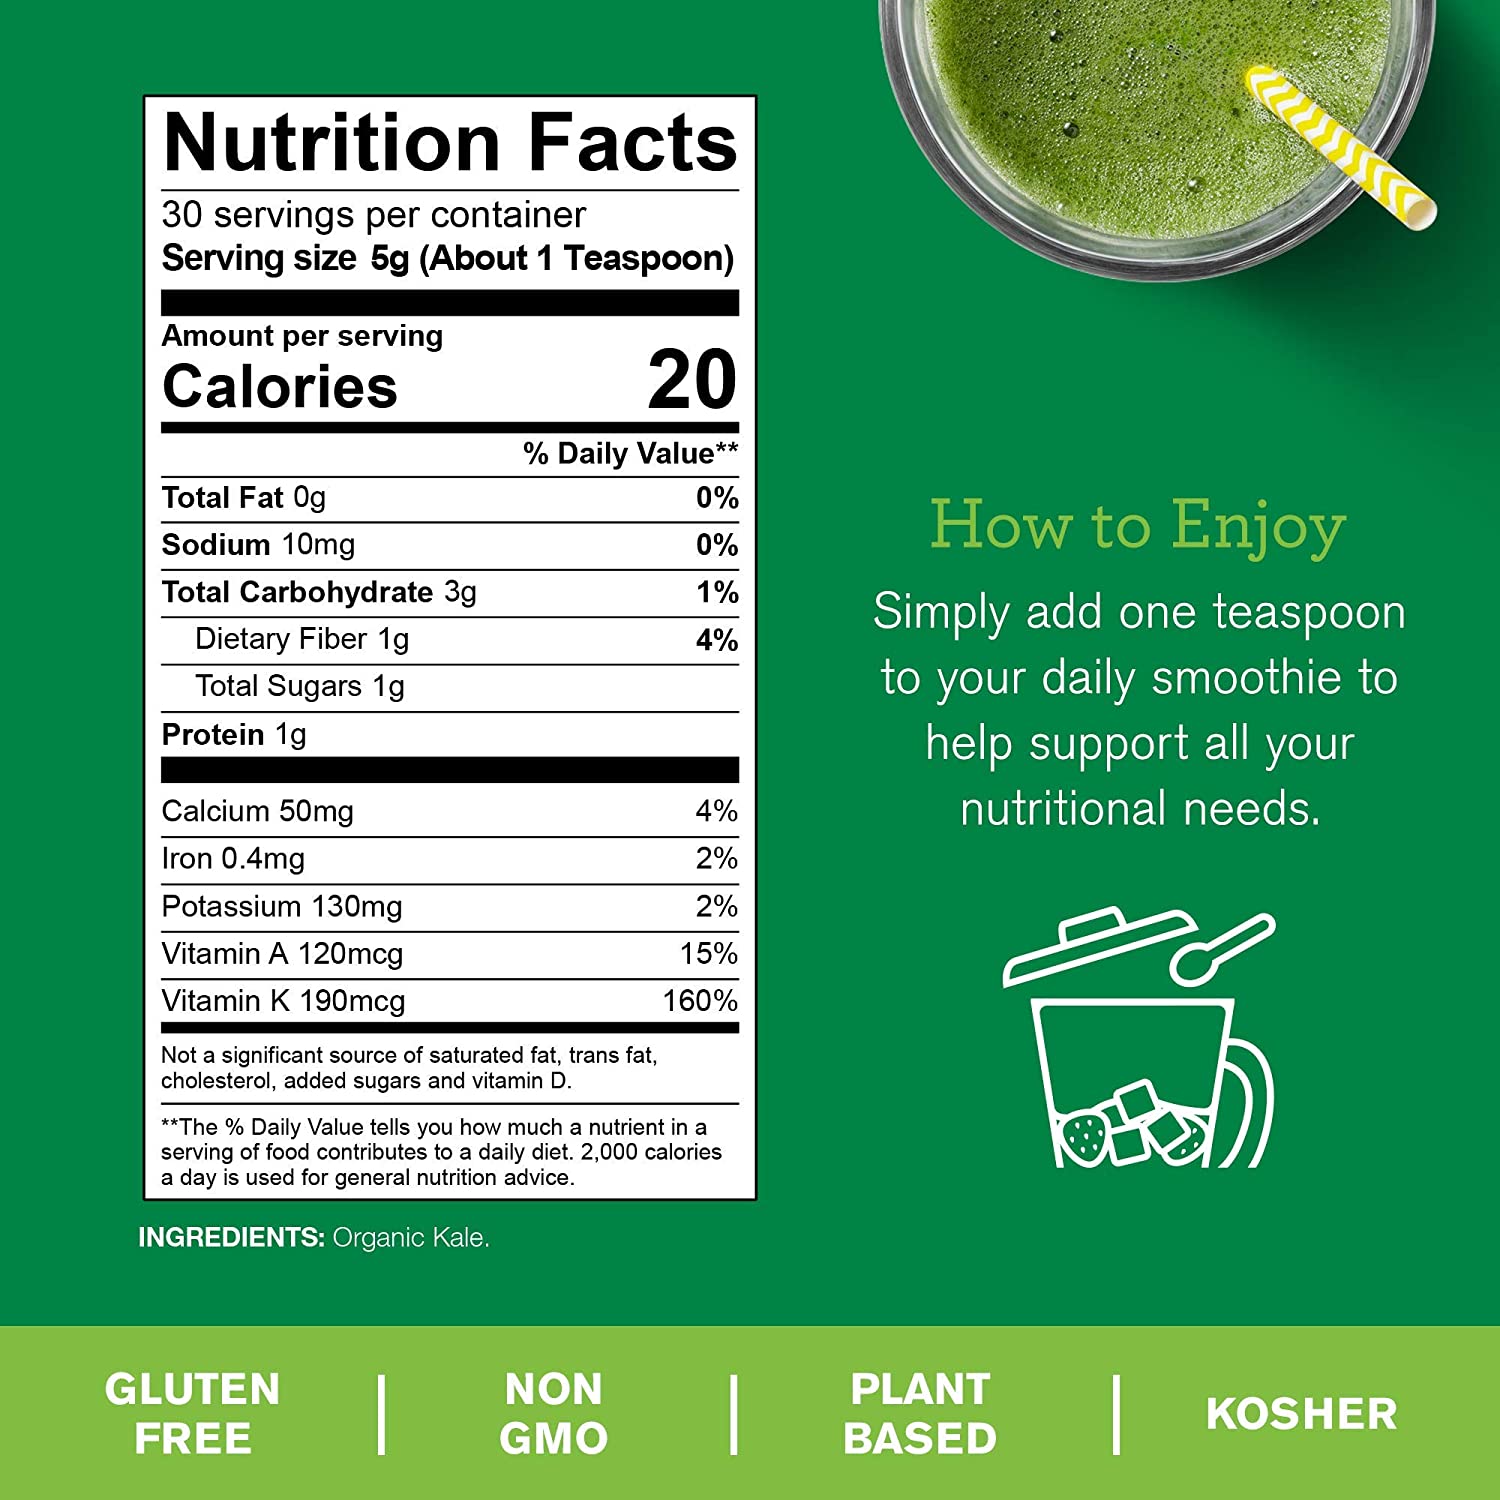 Amazing Grass, Organic Kale Powder source of Vitamin A & K, Super Food 5.29 oz (150 g)